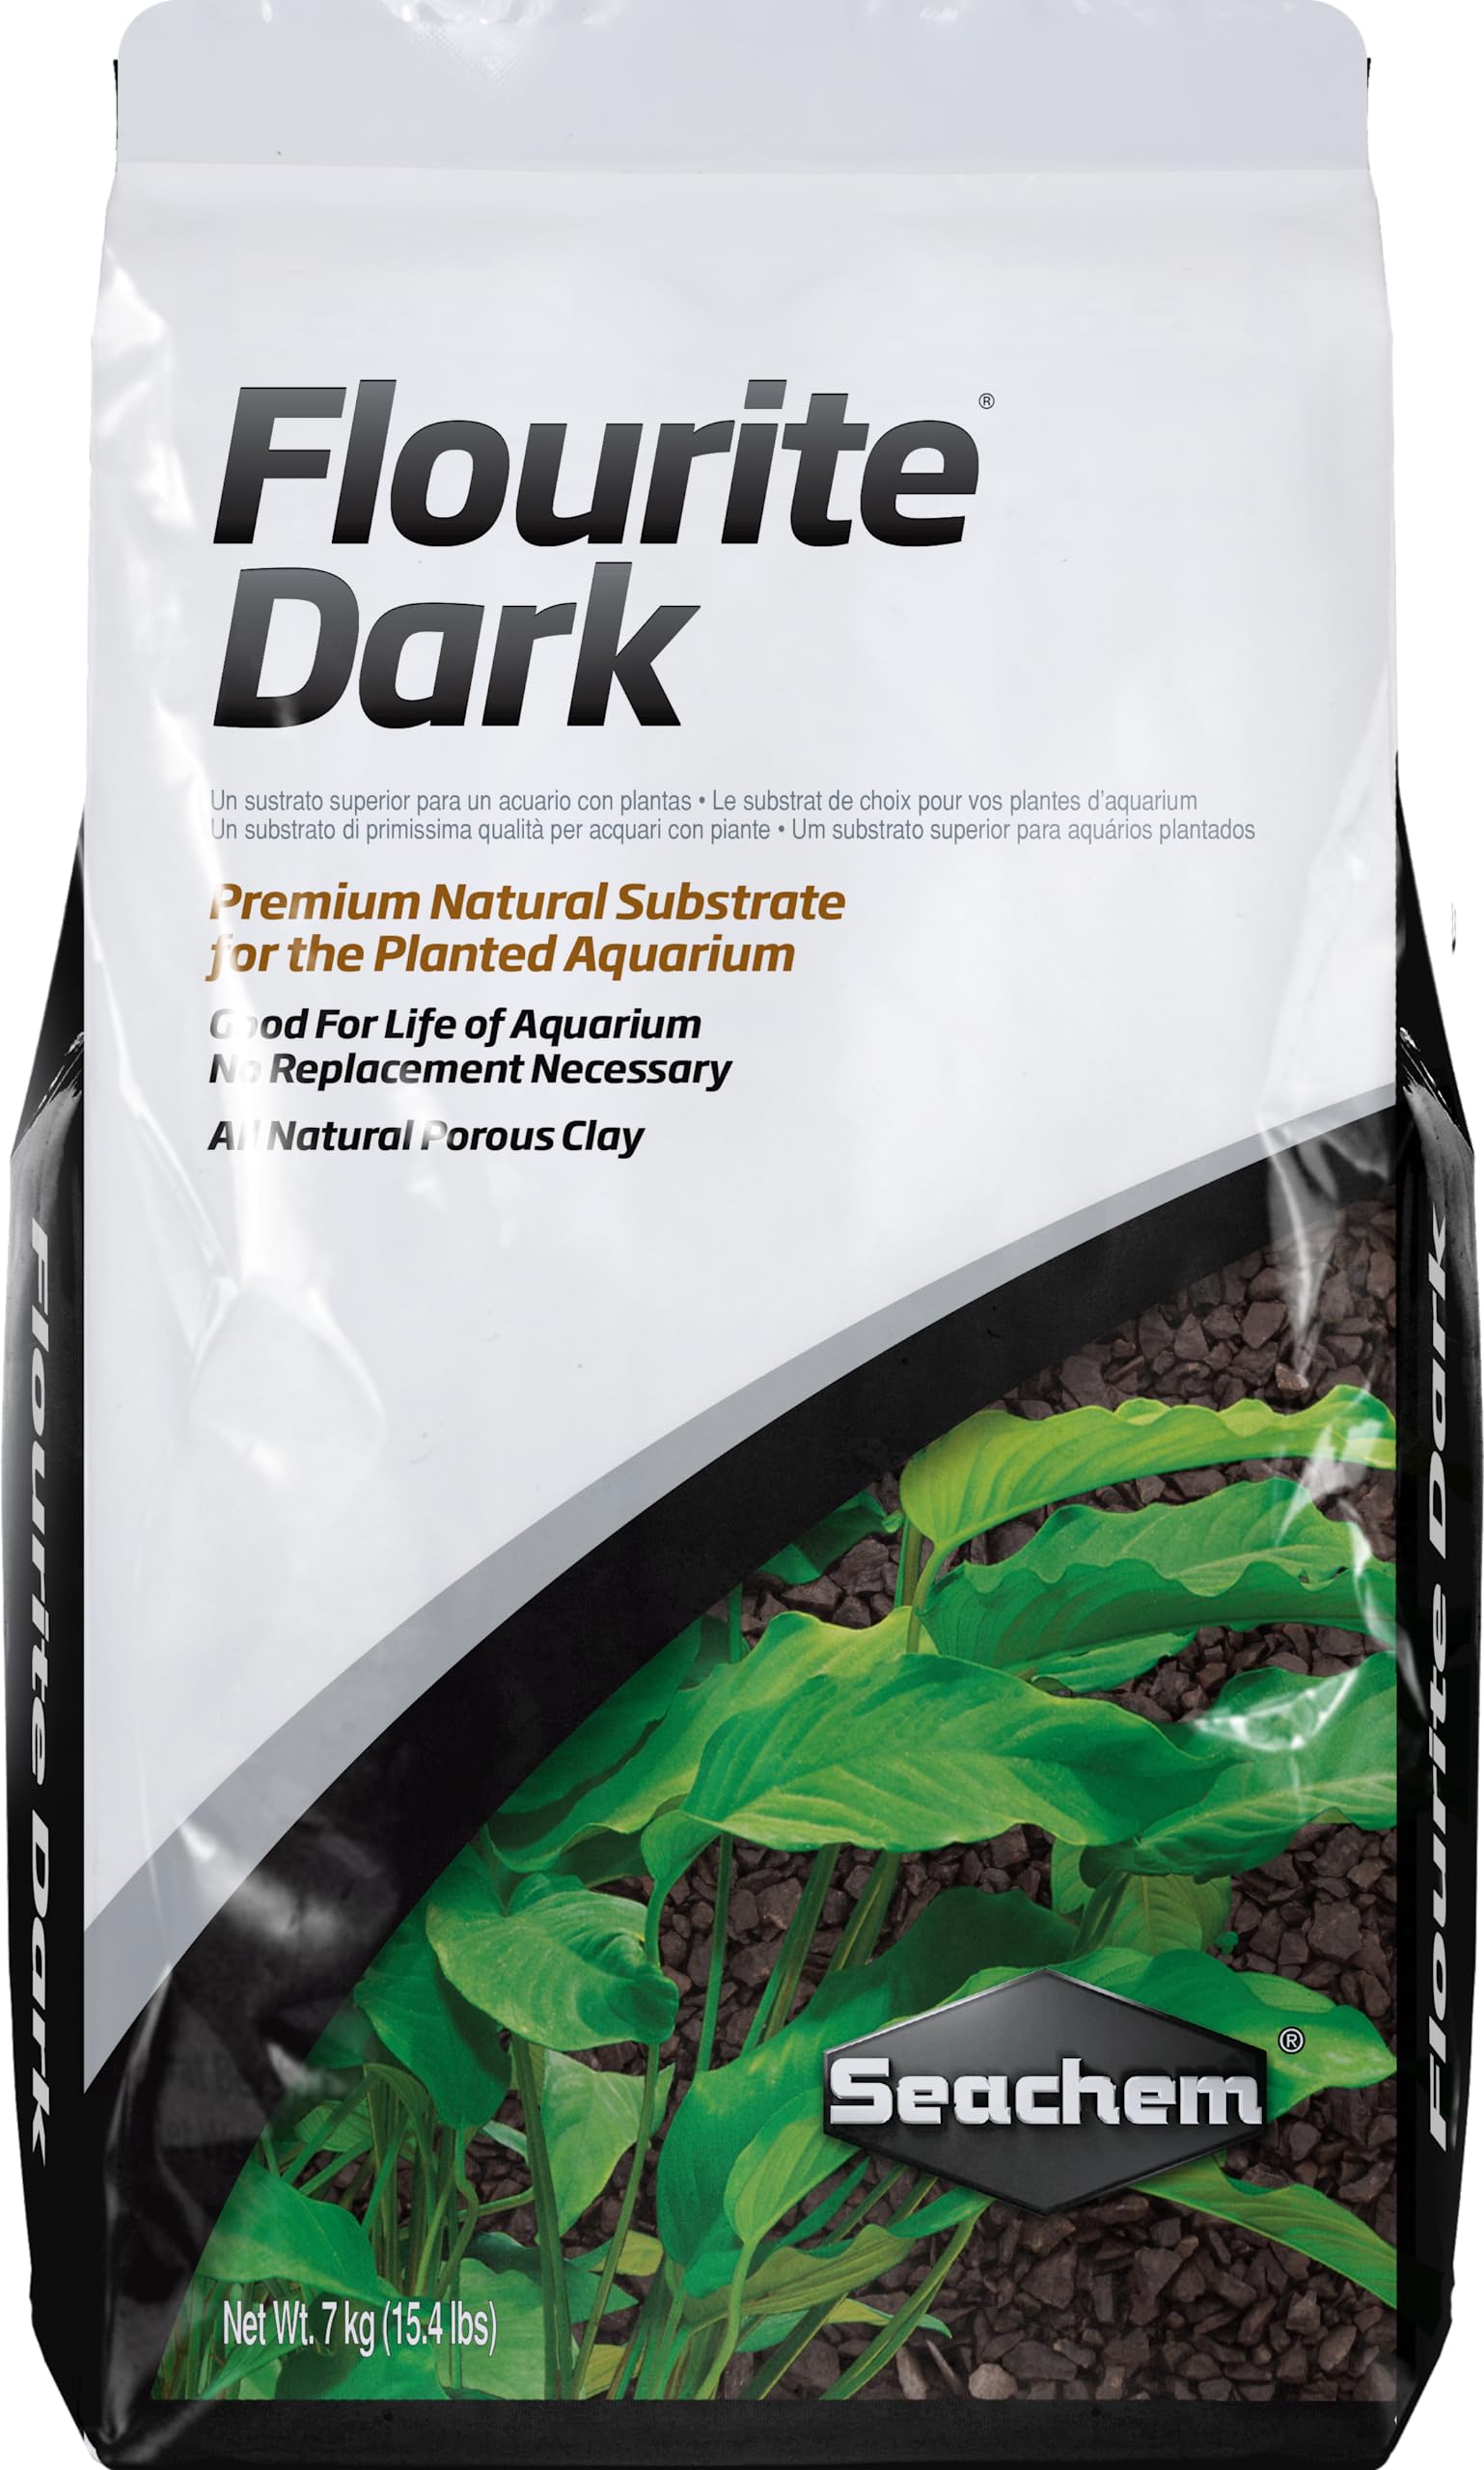 Flourite Dark: 7 kg / 15.4 lbs – Brand Name